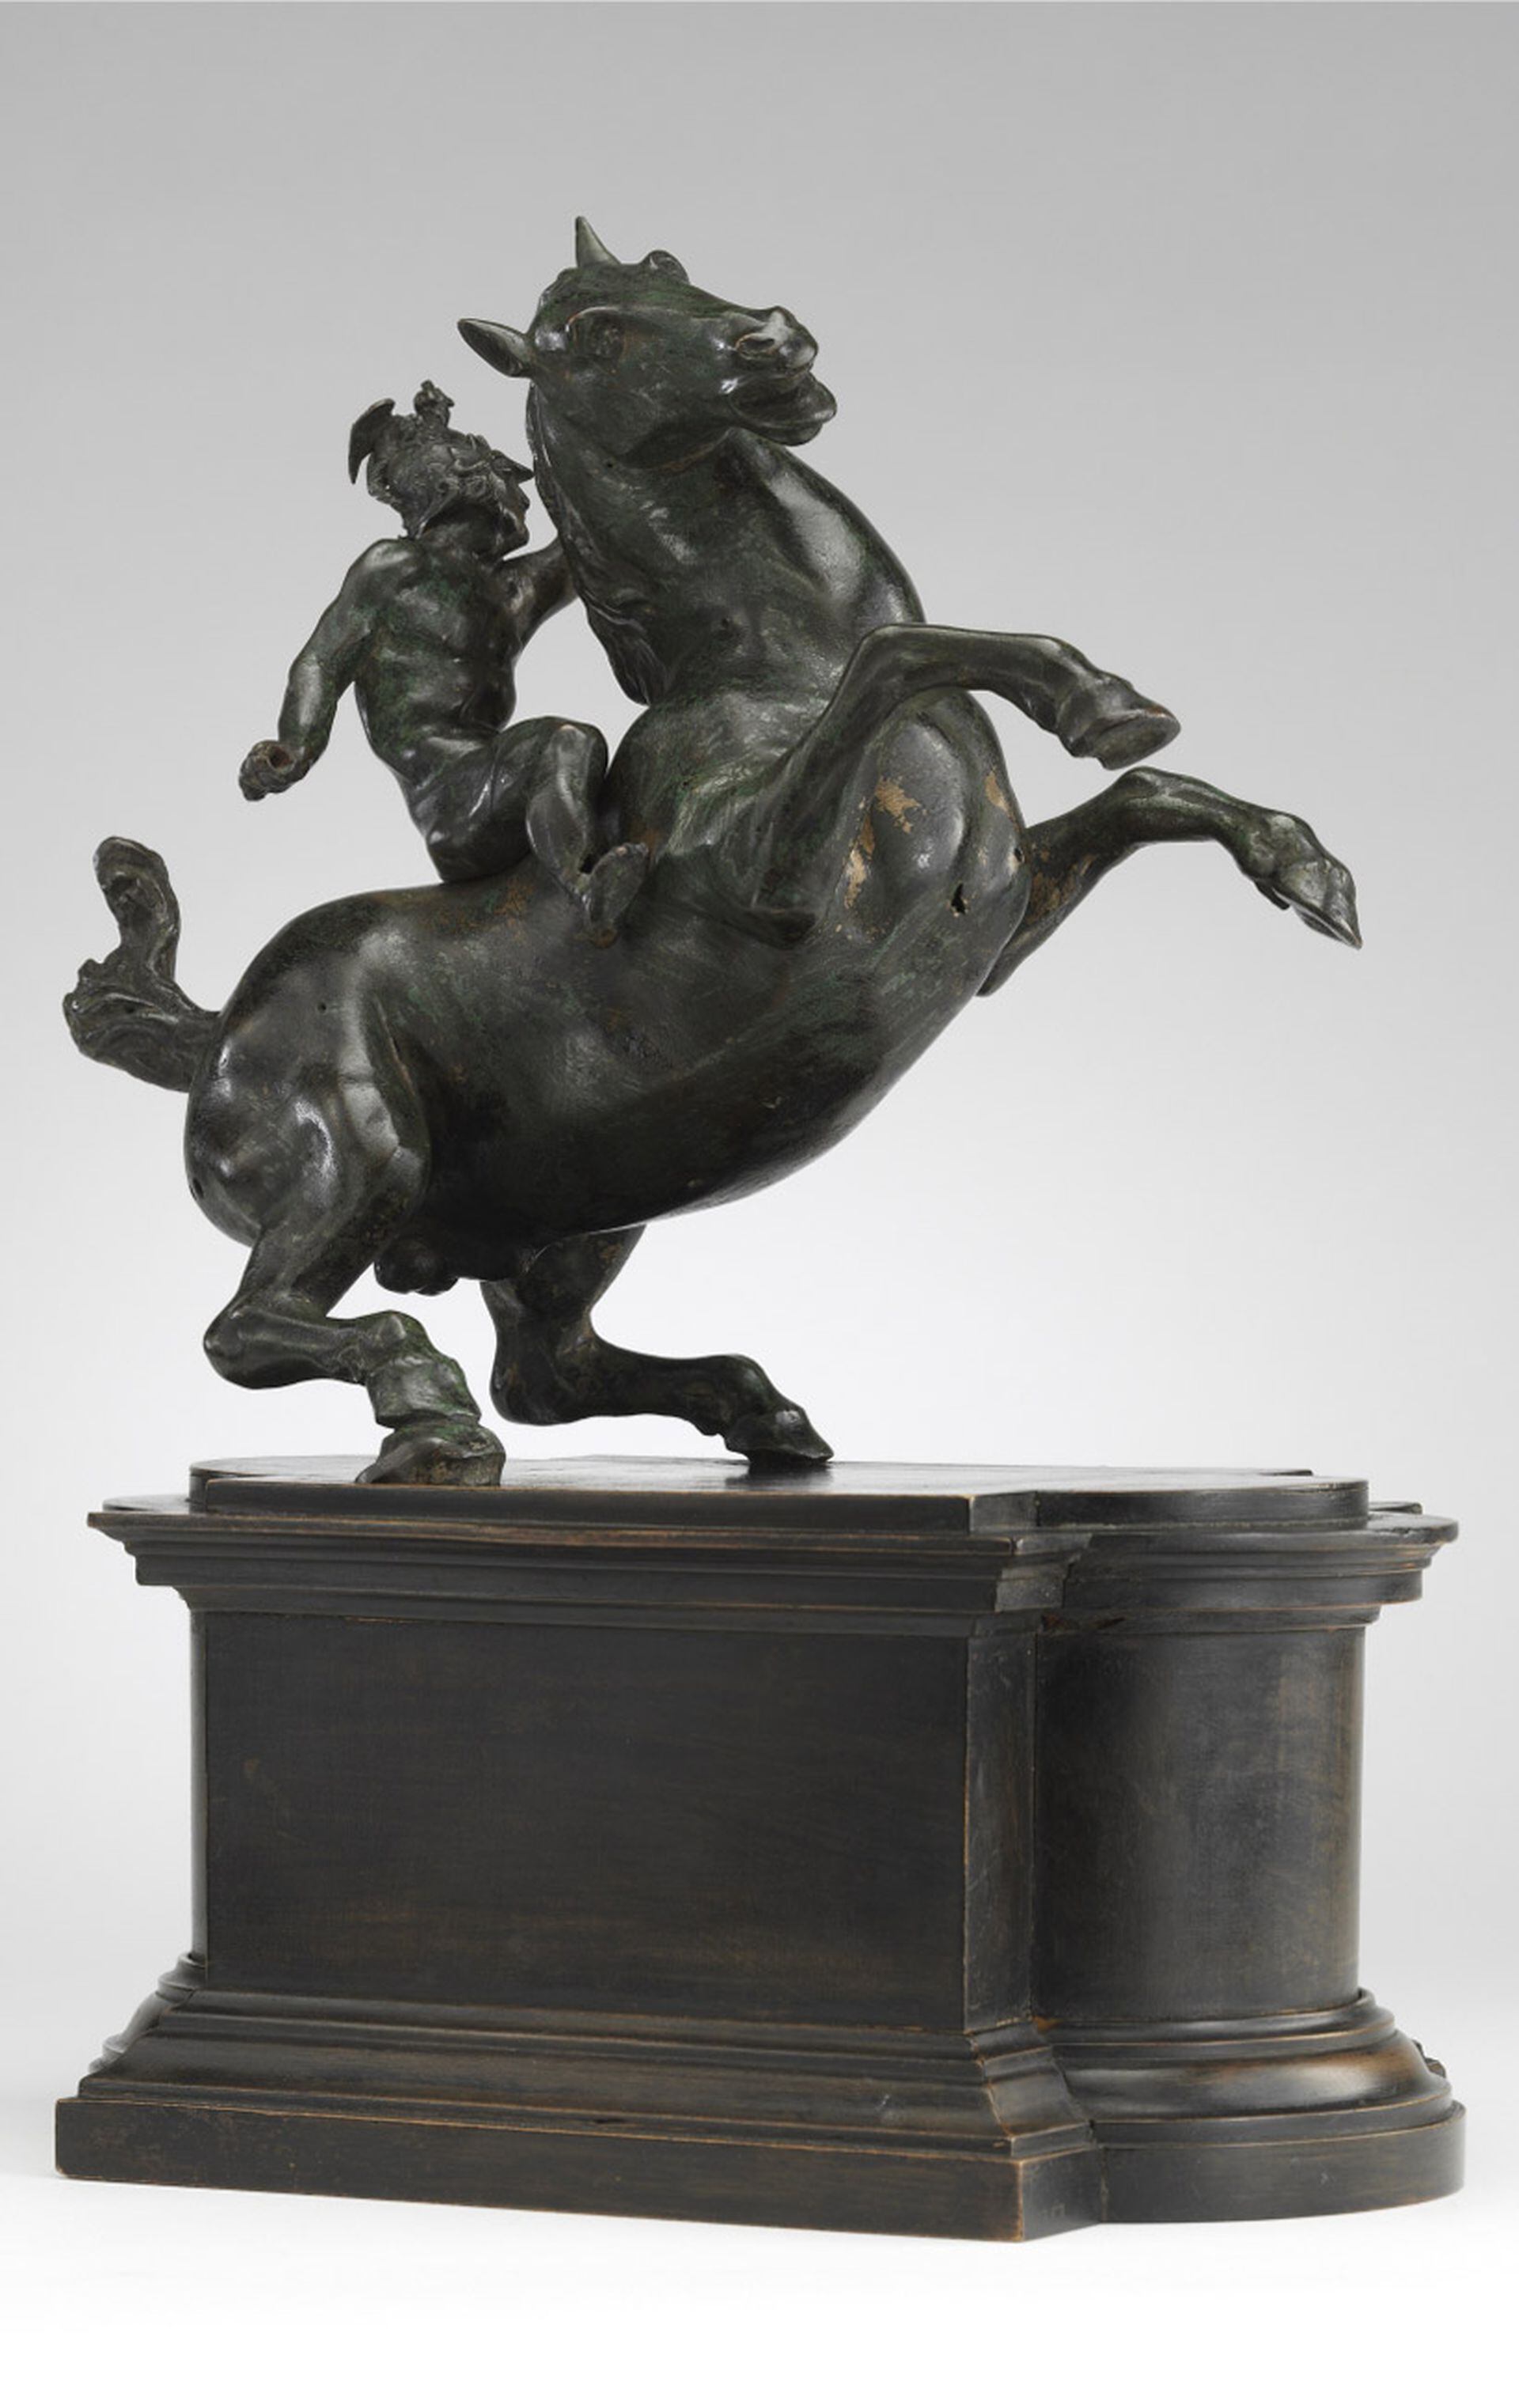 Leonardo da Vinci (atribuido) - "Guerrero a caballo", 1500-1550.